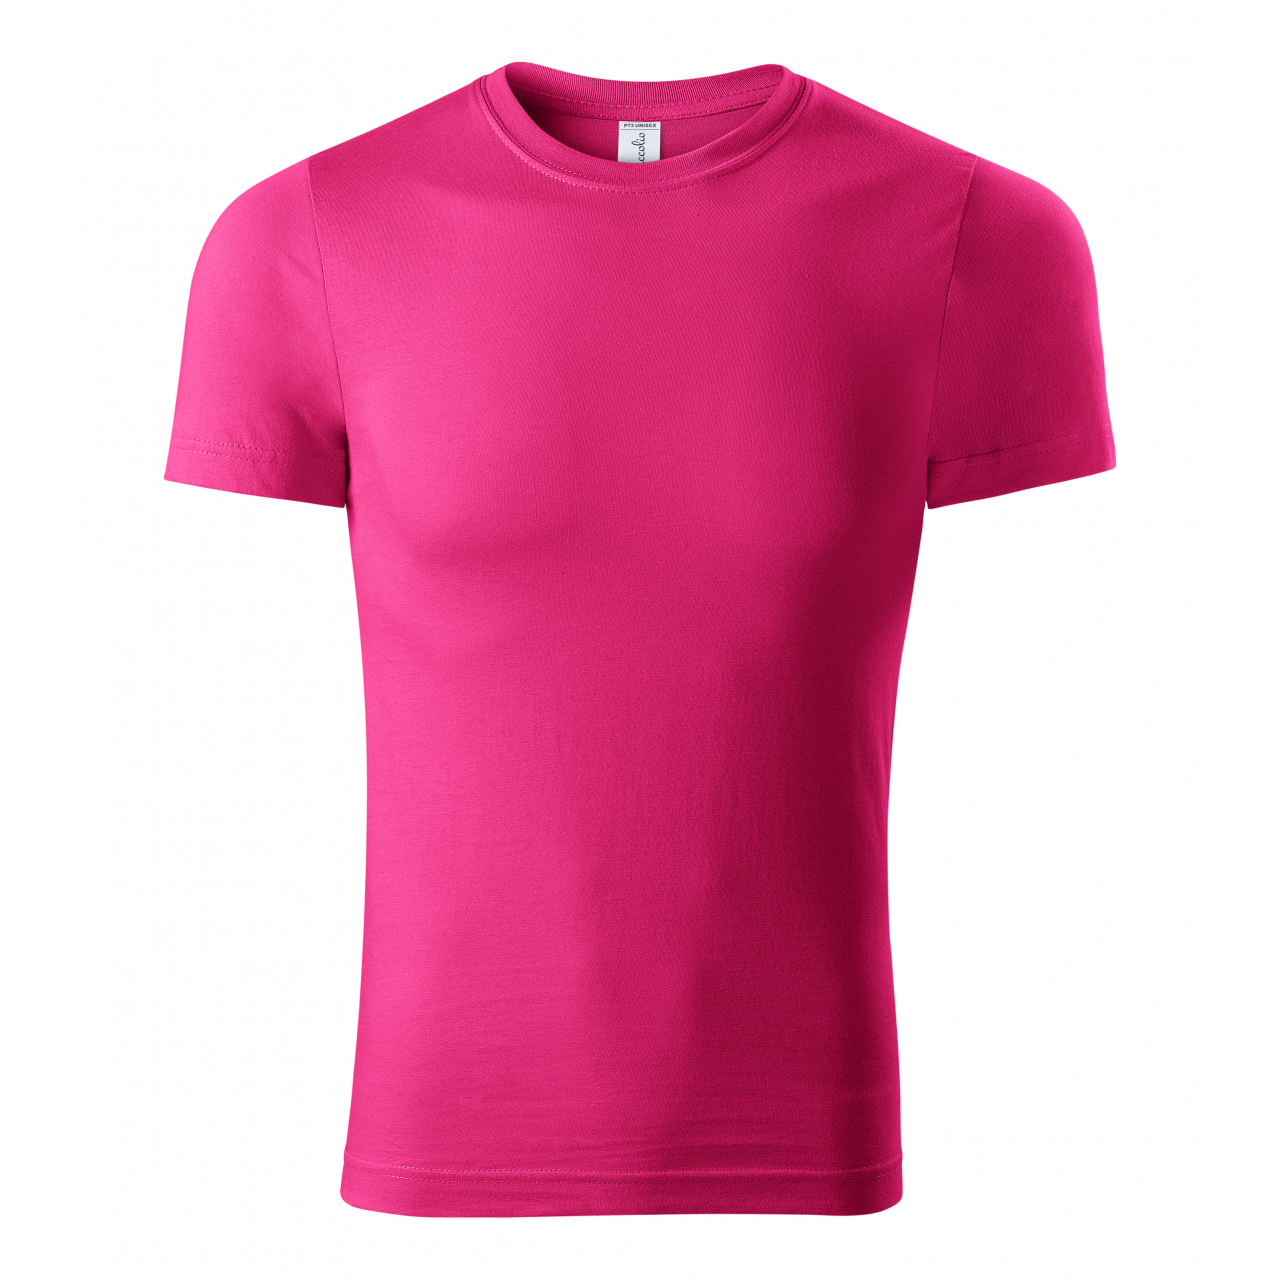 Tričko unisex Piccolio Paint - růžové, XL